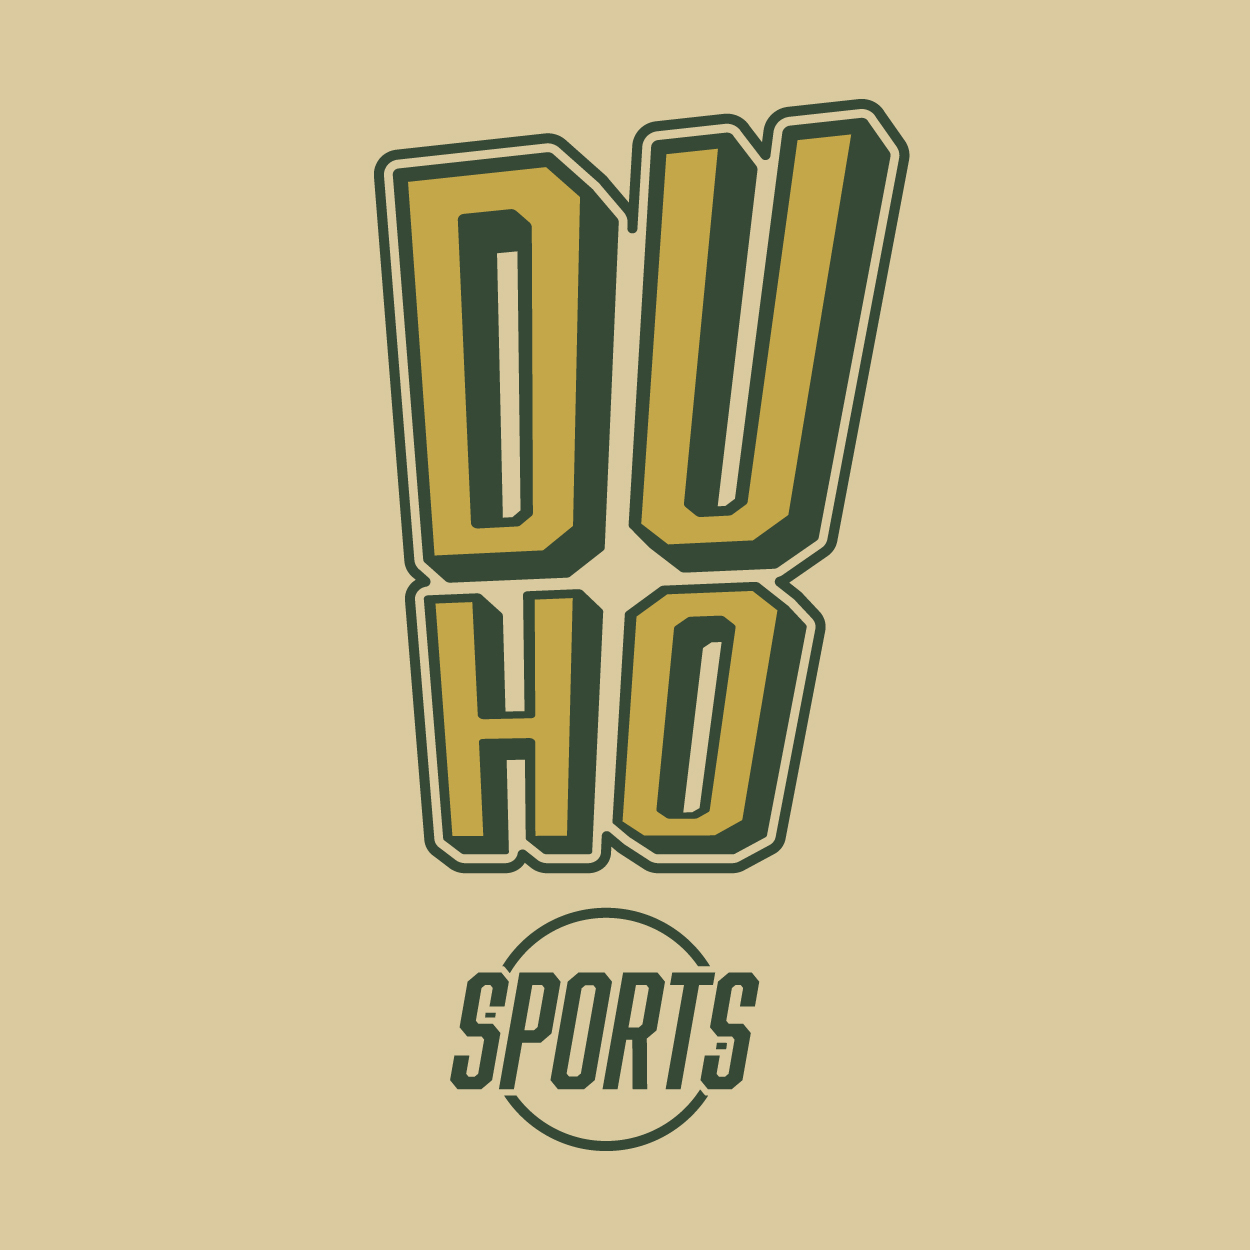 DuHosports logo